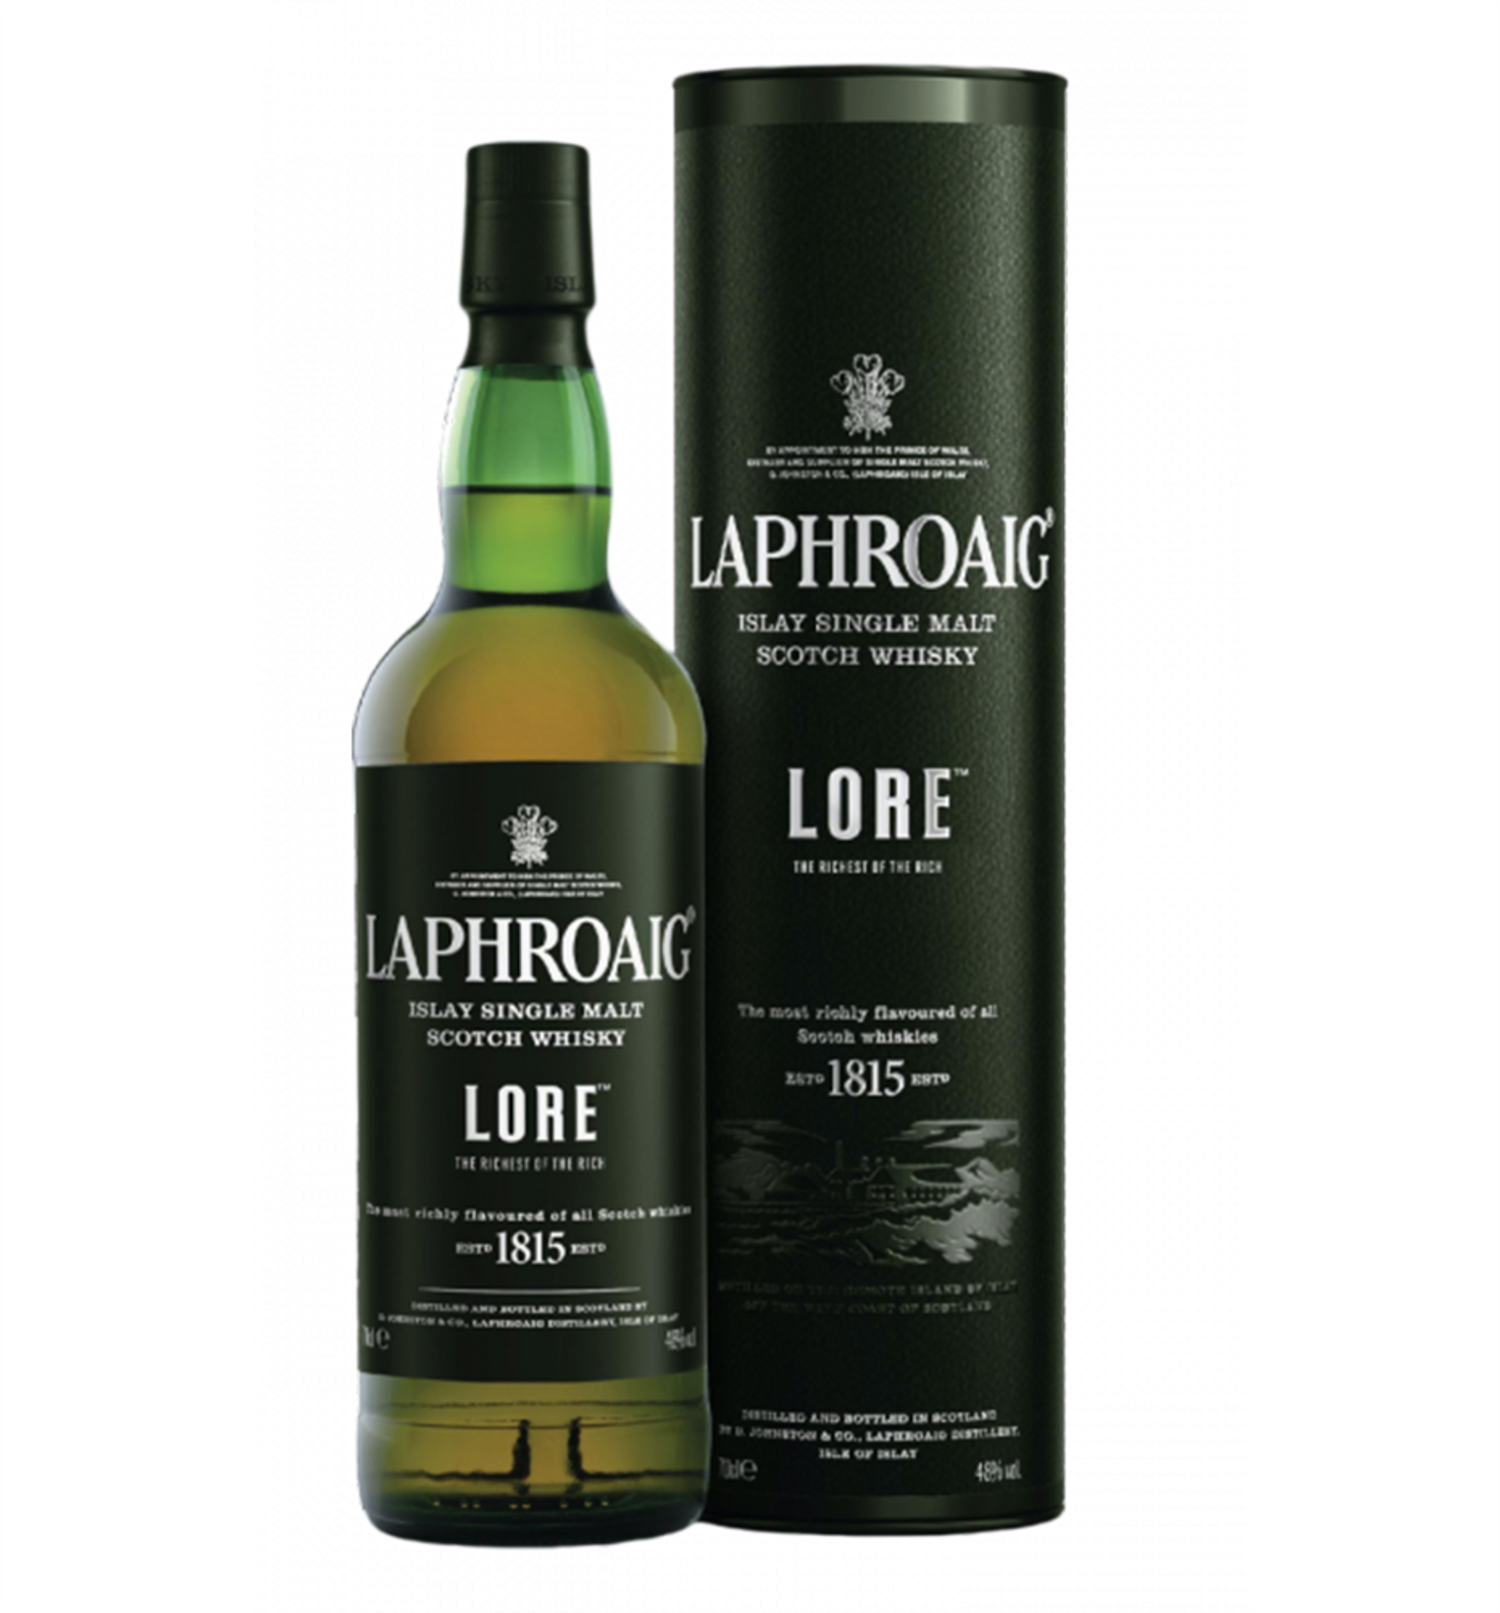 Laphroaig Lore Islay Single Malt Scotch Whisky $132 FREE DELIVERY